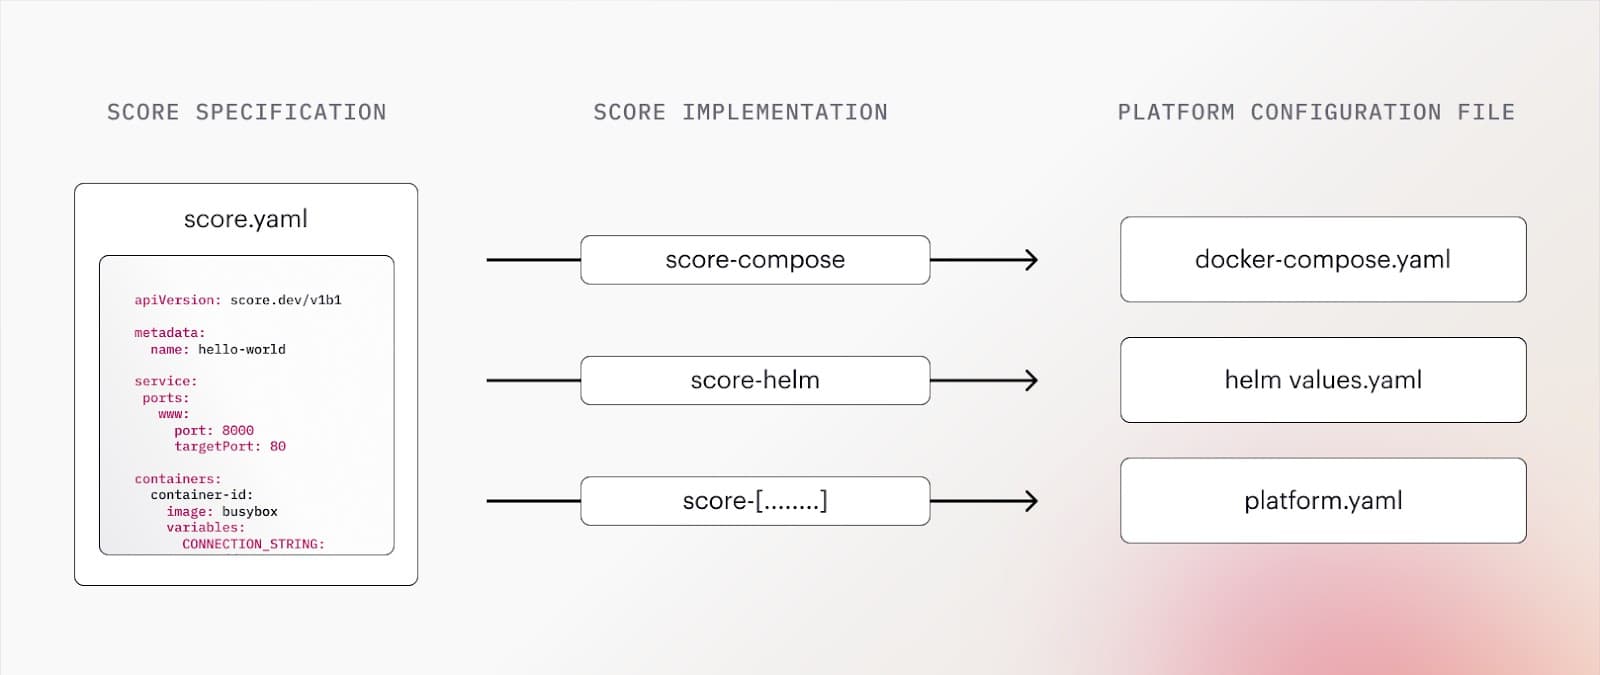 Diagram flow showing score workload specification